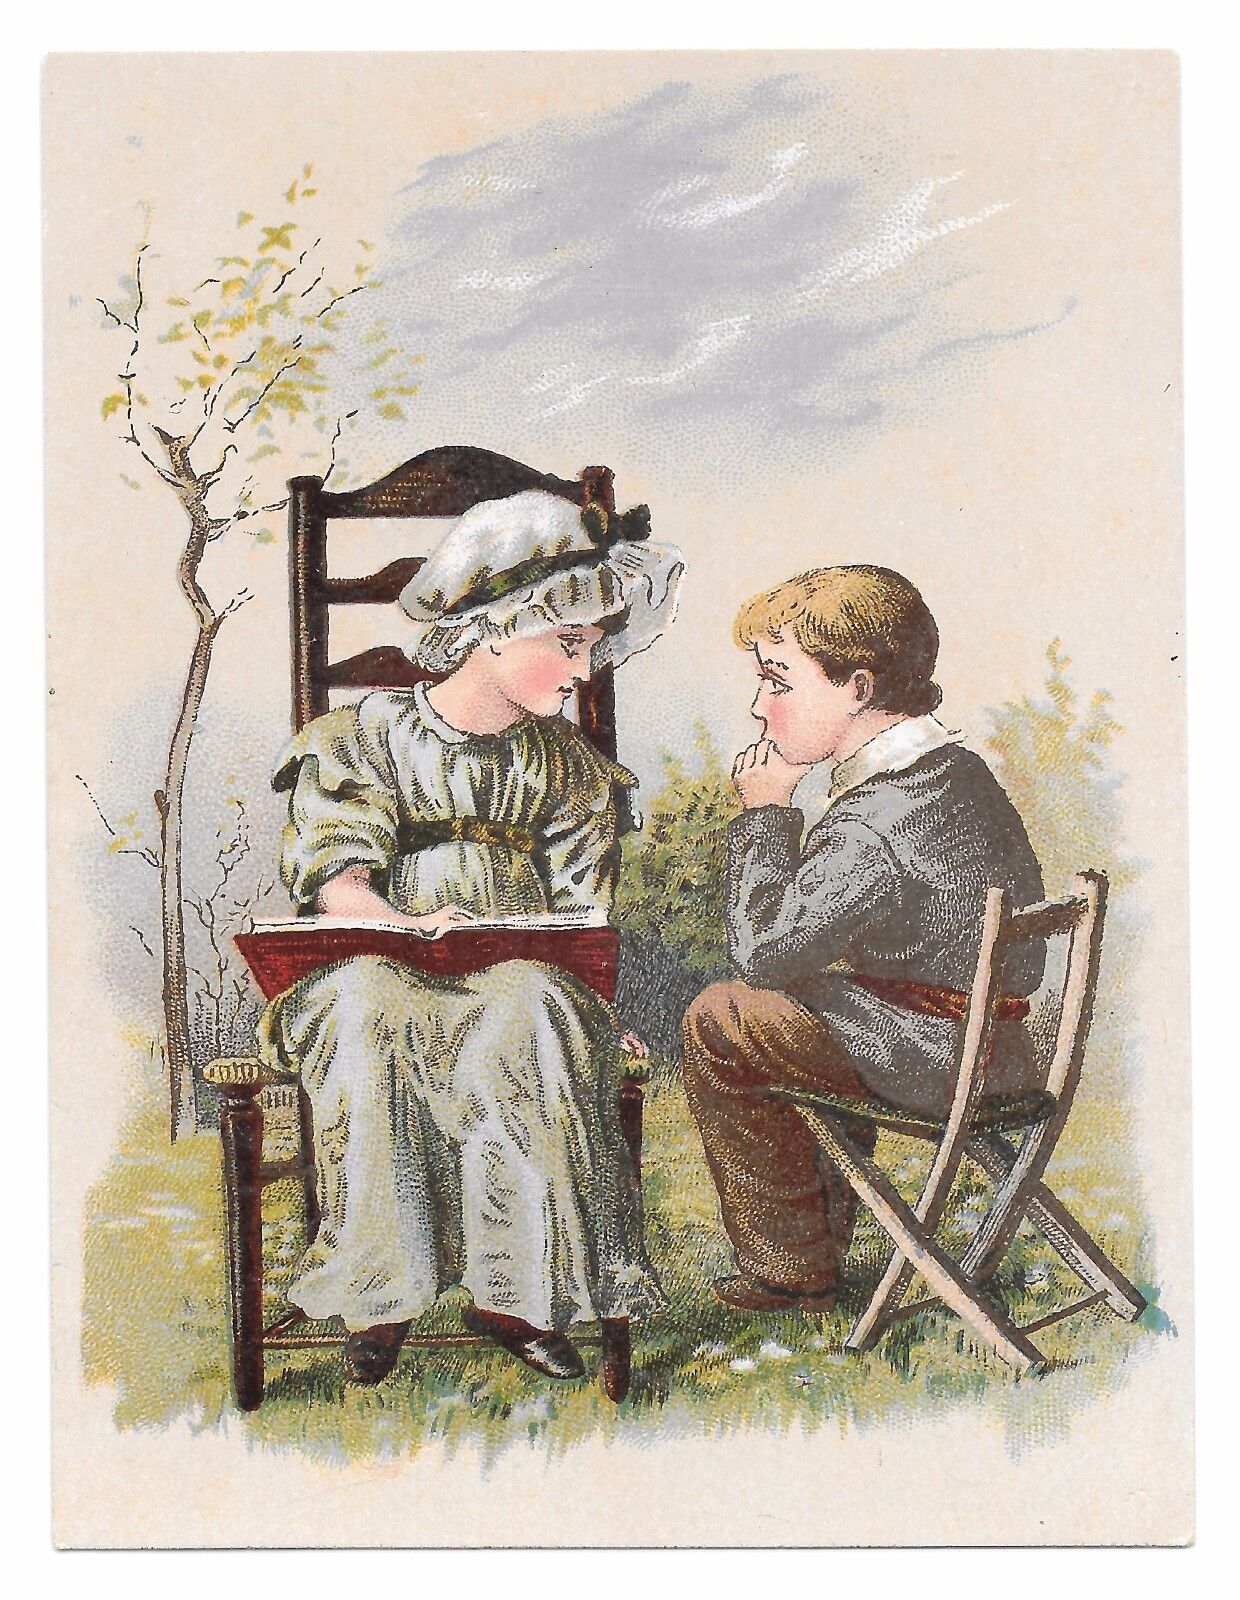 Victorian schoolboy receives lesson from teacher outdoors (O. & O. Tea)